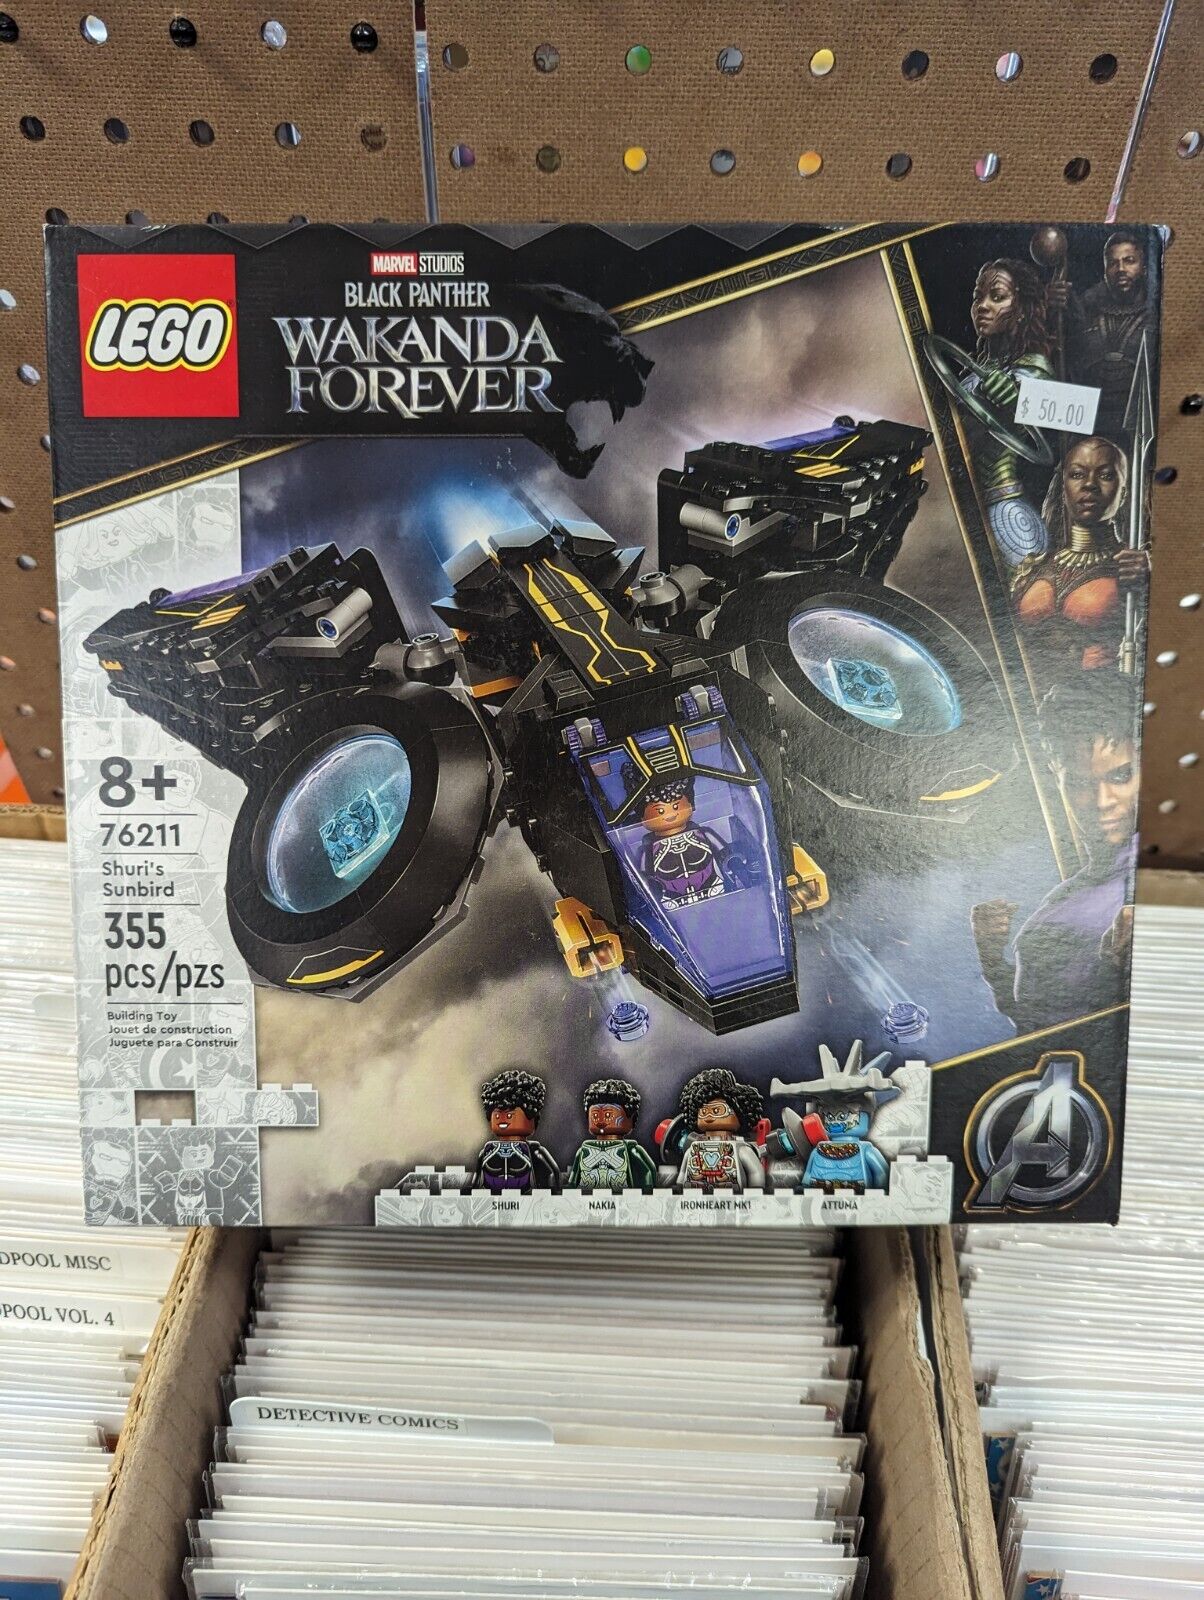 LEGO Shuri's Sunbird 76211 Black Panther Wanda Forever